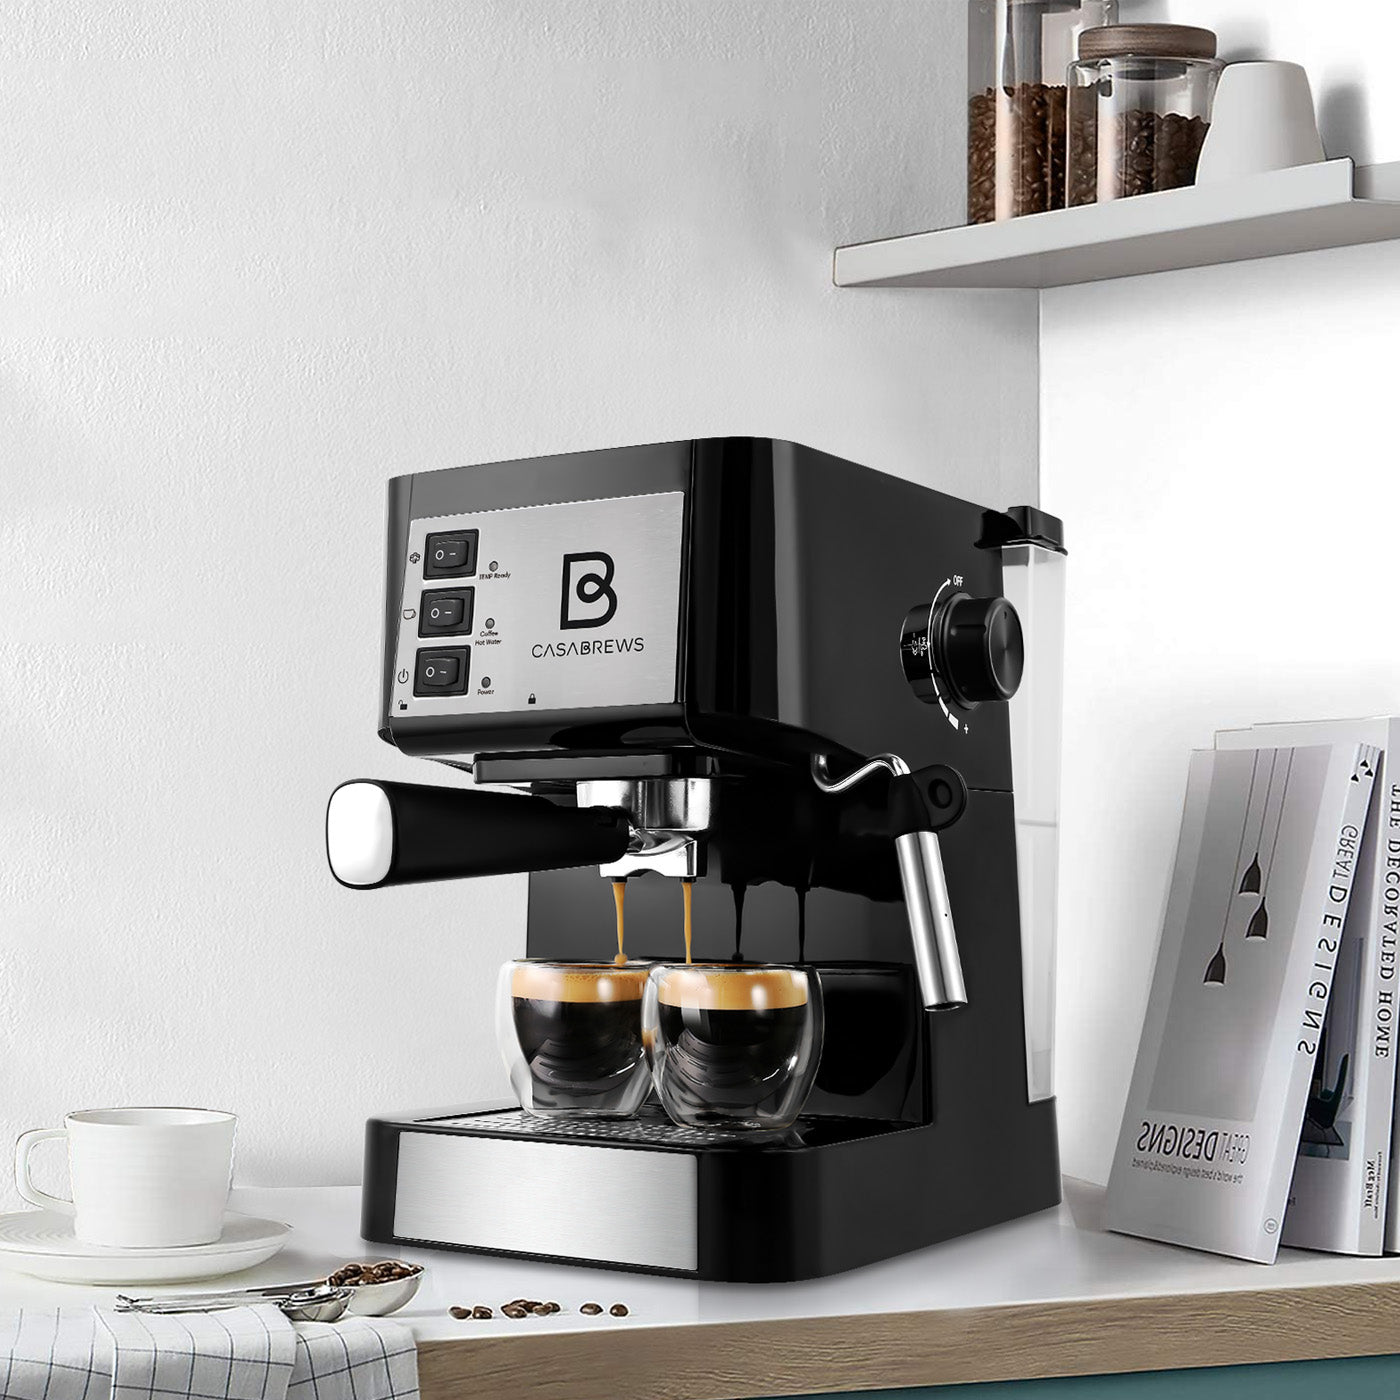 CASABREWS Casabrews CM1699 Compact Sleek Design Espresso Machine with Milk Frother Wand